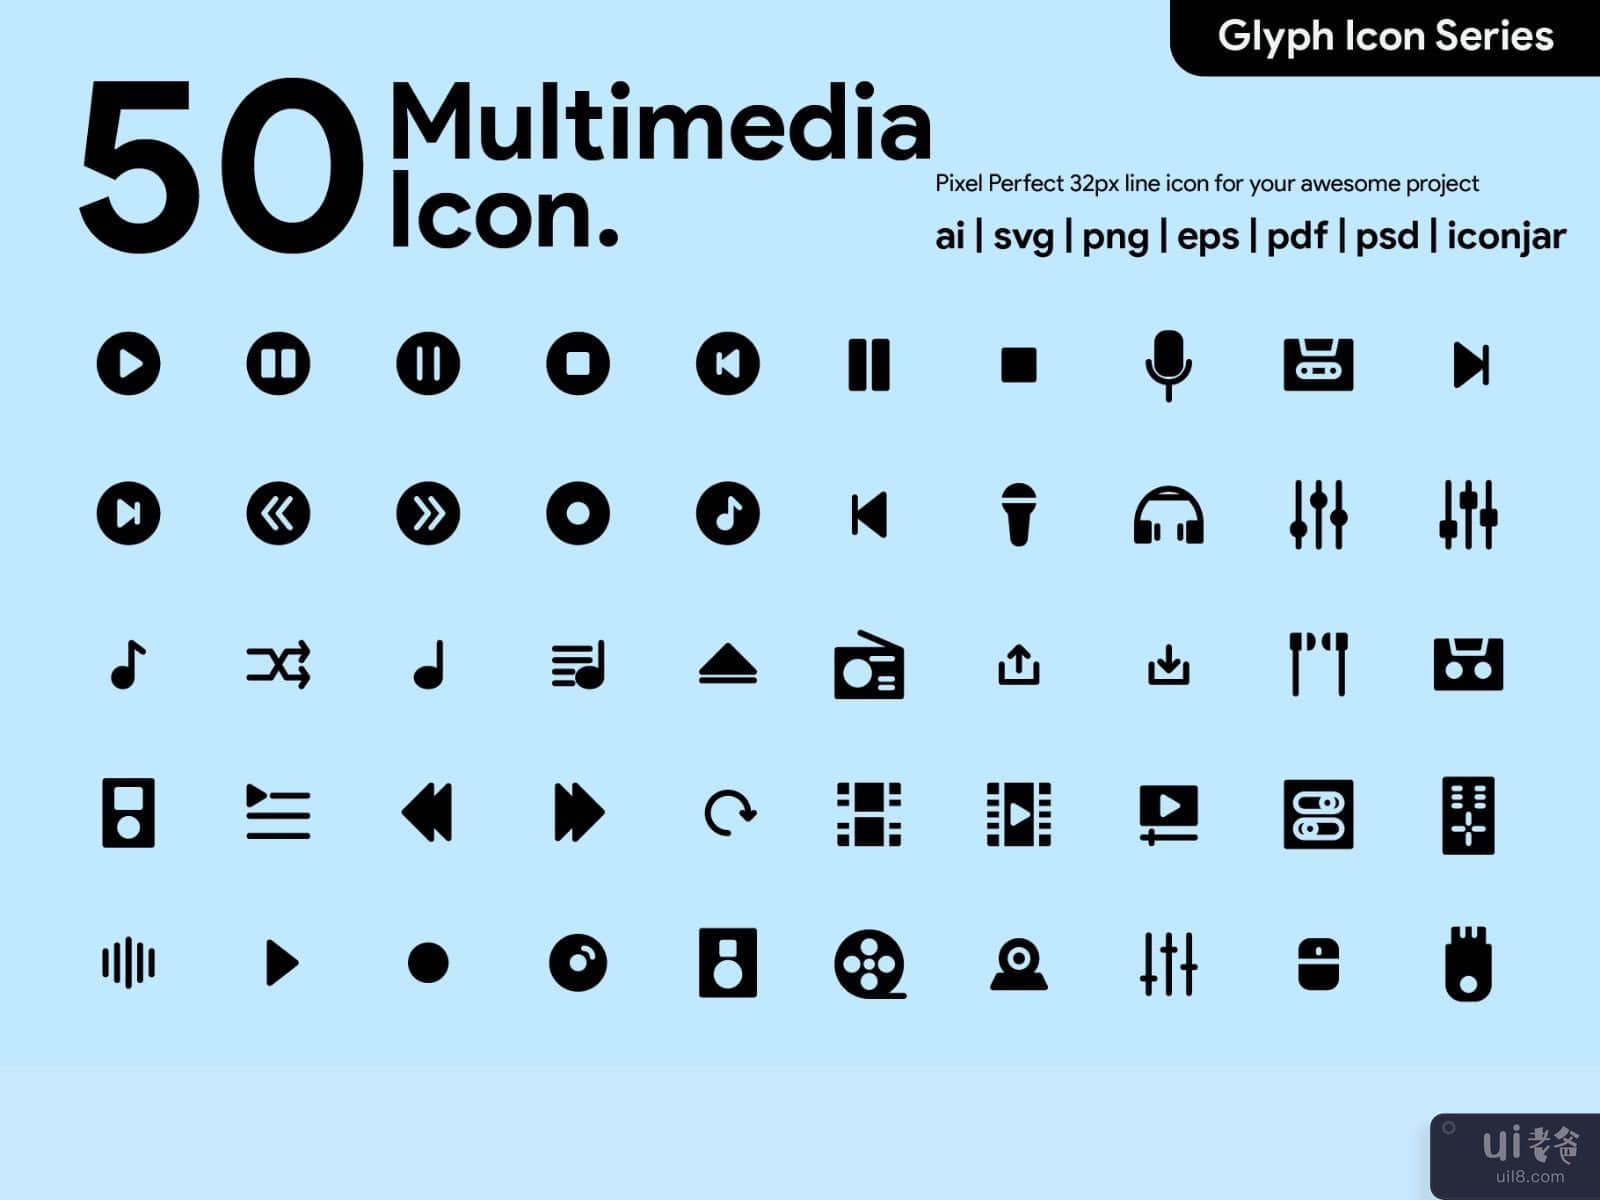 Kawaicon - 50 Multimedia Glyph Icon Set